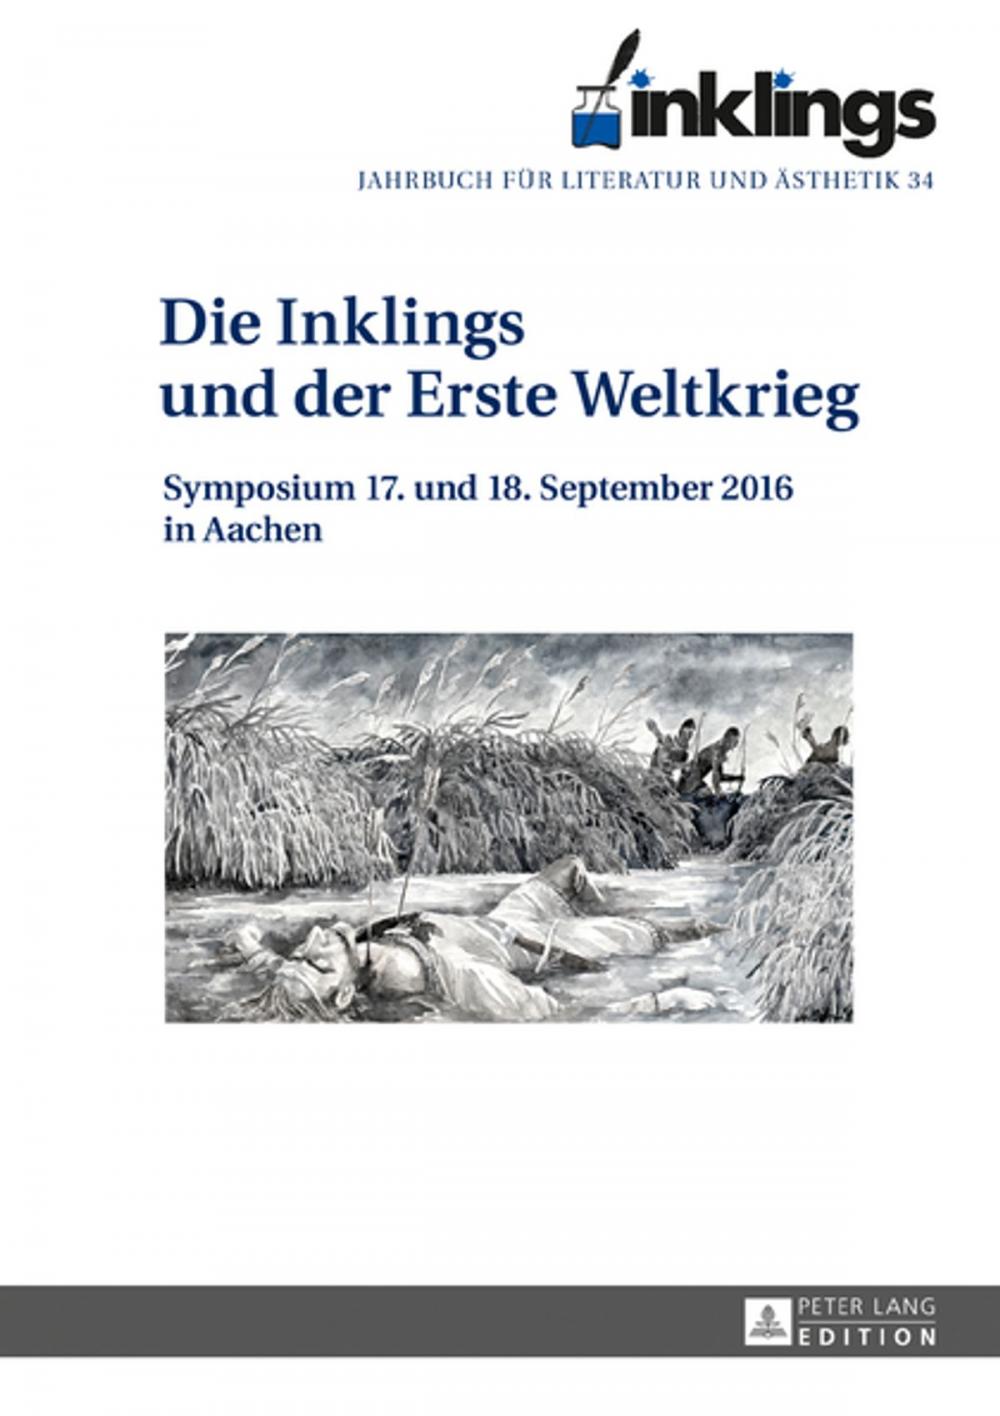 Big bigCover of inklings Jahrbuch fuer Literatur und Aesthetik